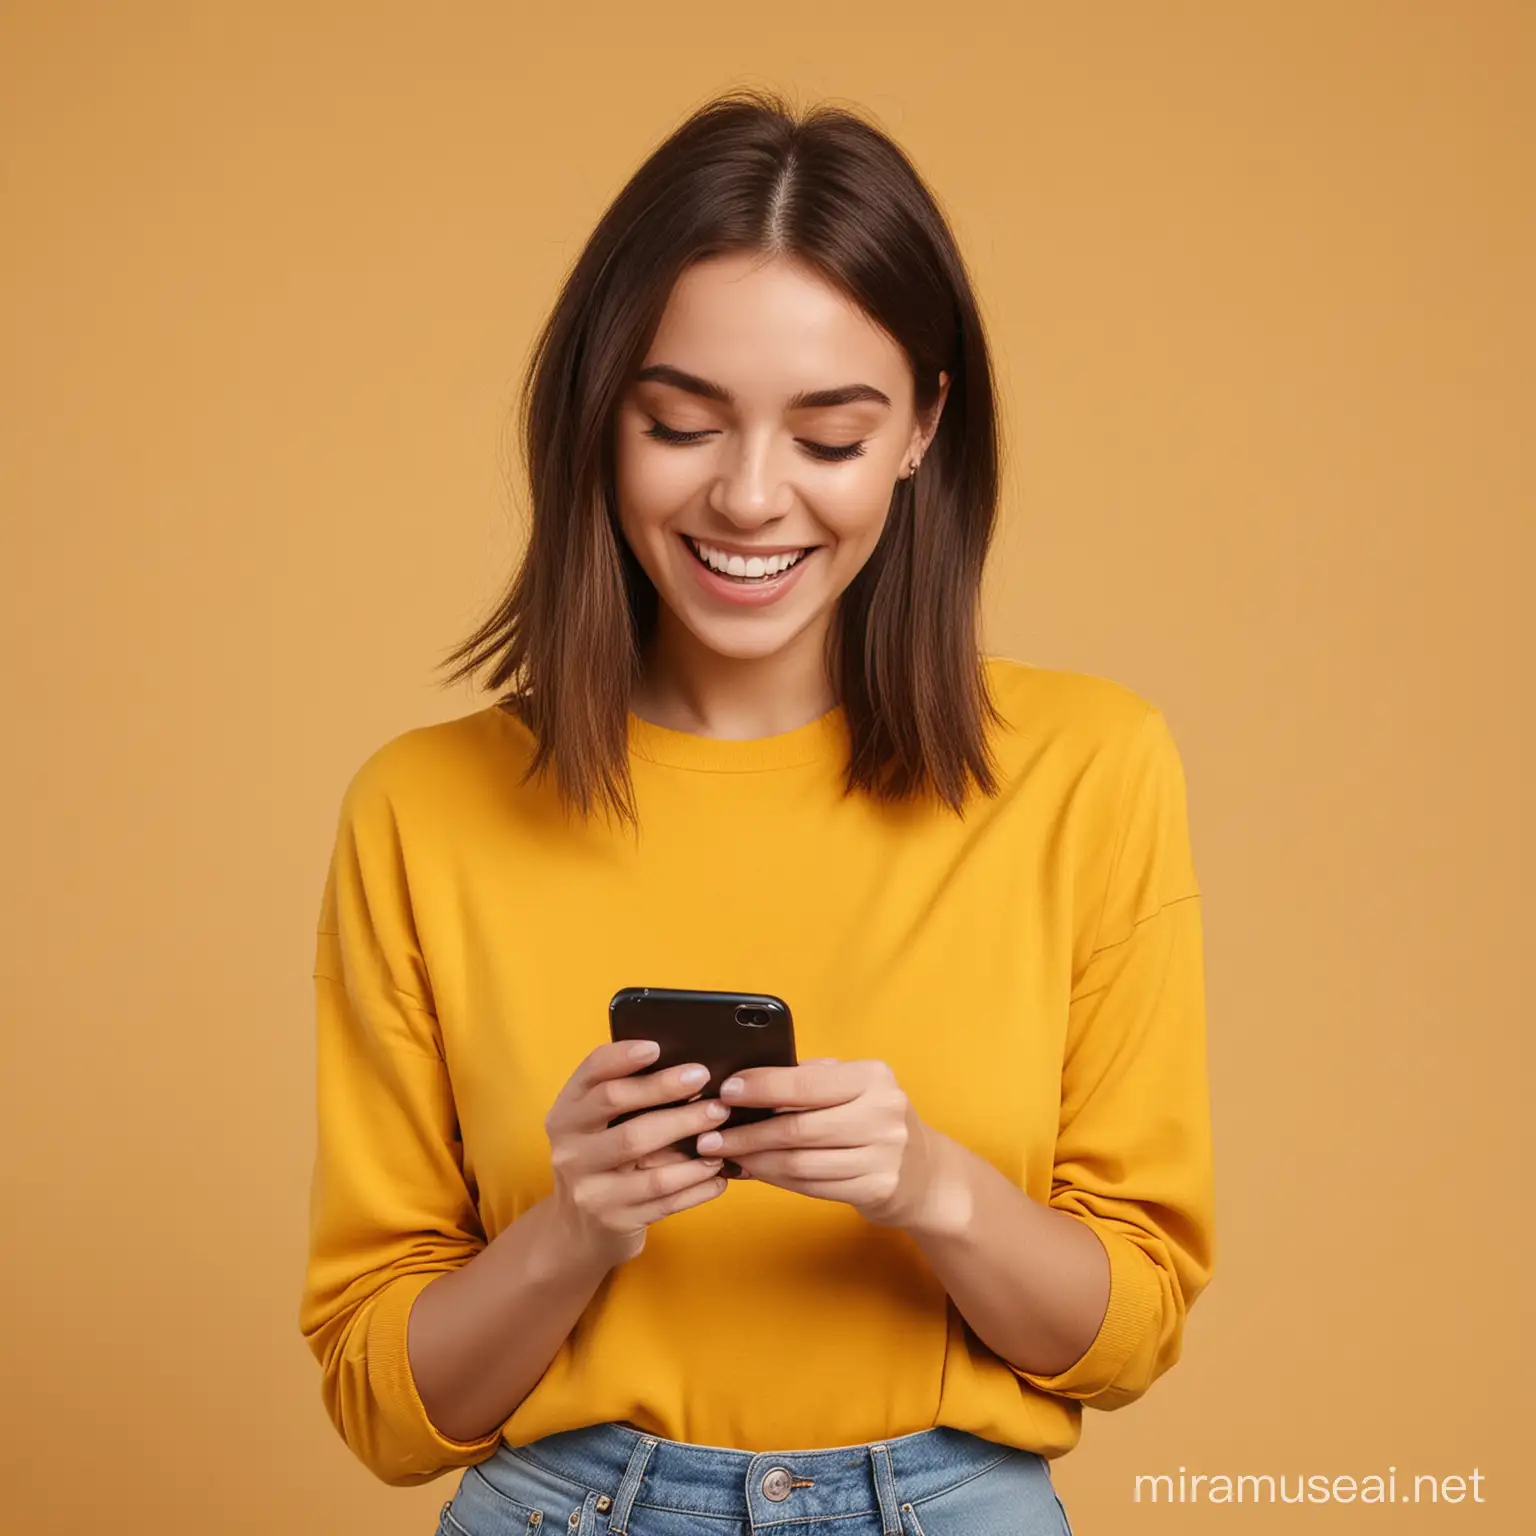 Joyful Young Woman Checking Smartphone on Vibrant Yellow Background